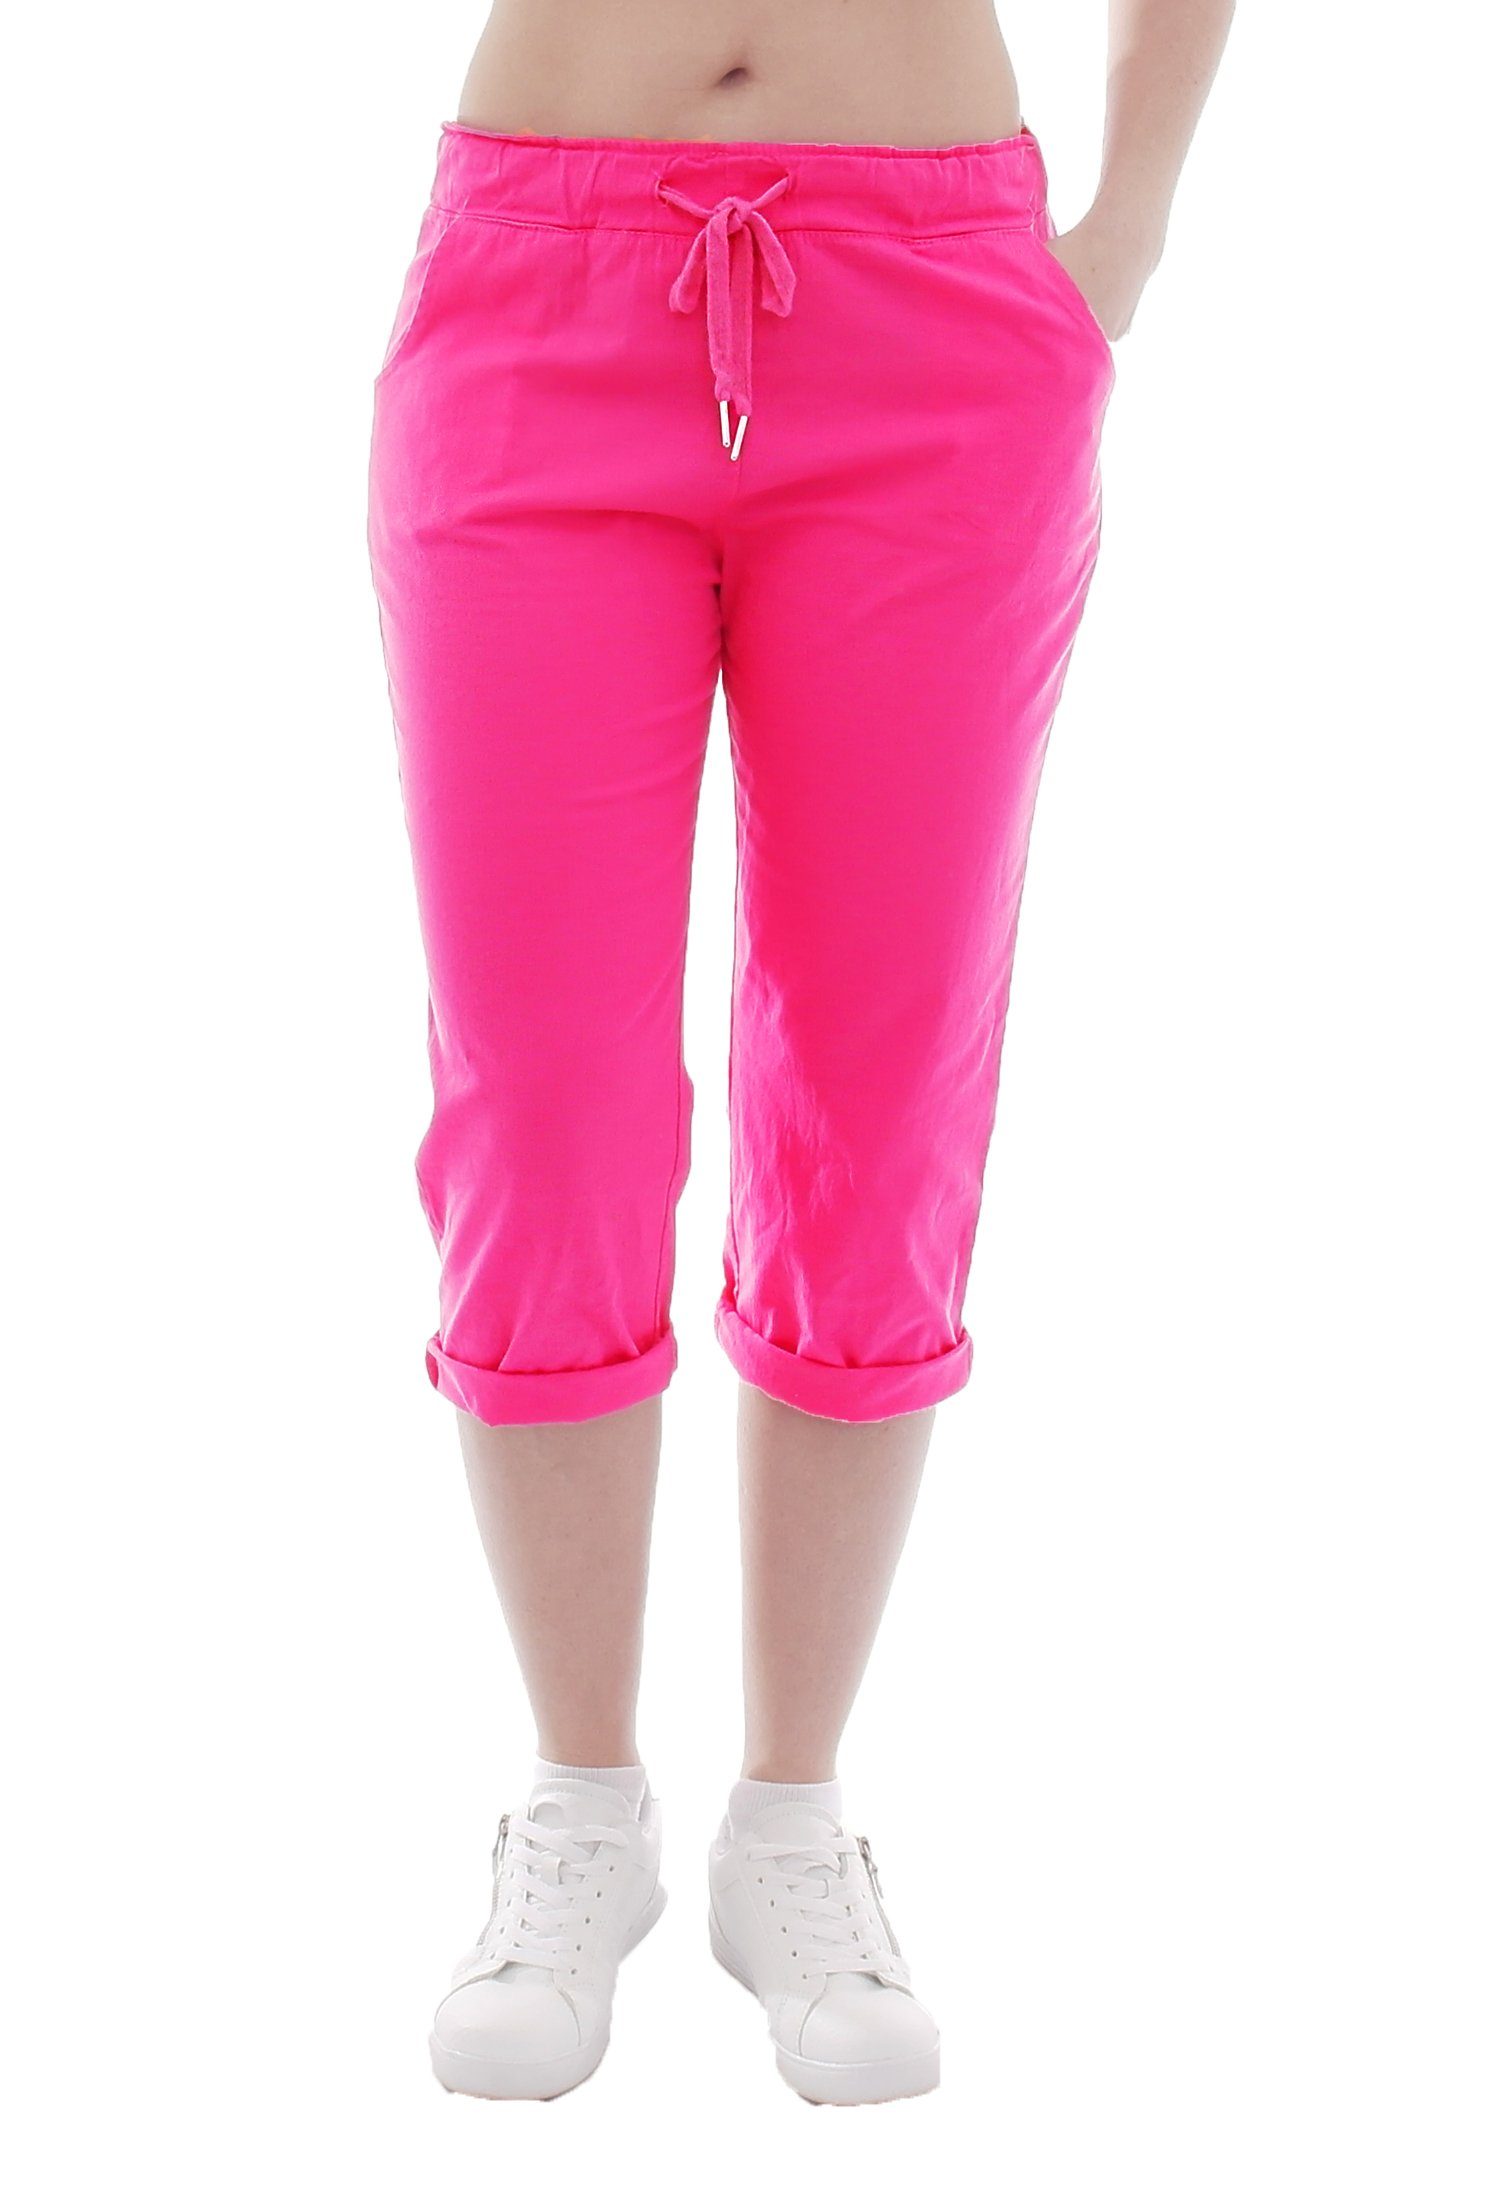 YESET Caprihose YESET Damen Chino Sommer Capri 3/4 Hose Damenhose Pink XXL Schlupfhose | Shorts